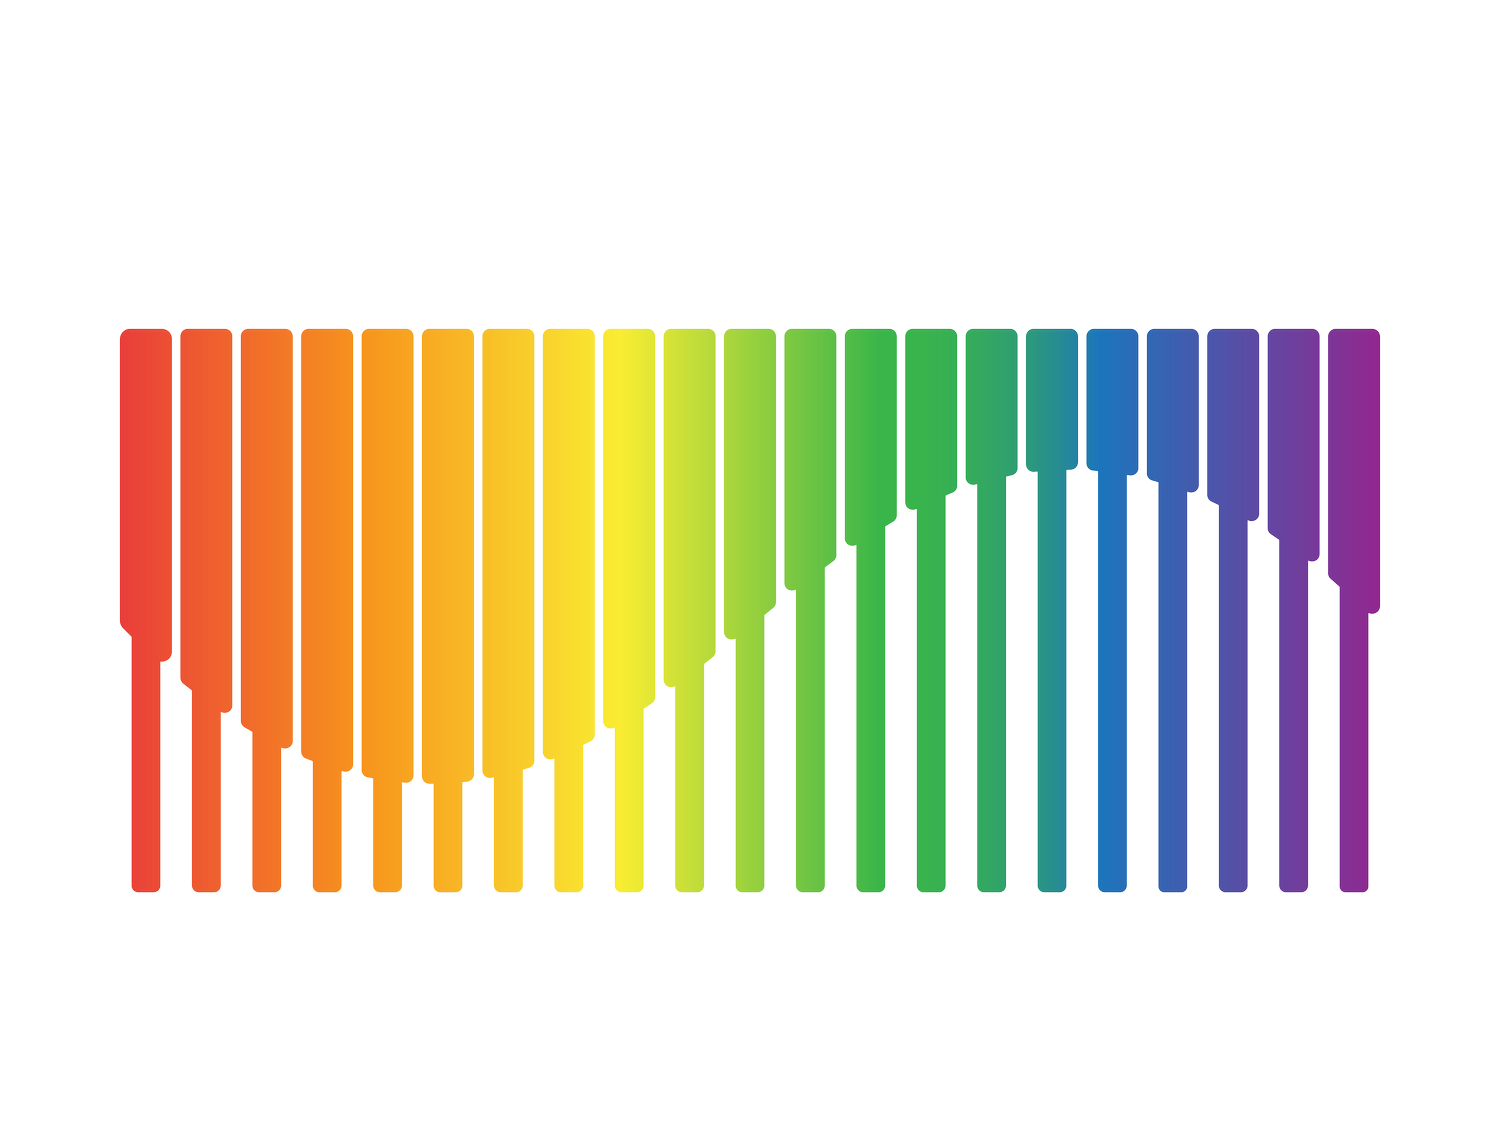 Spectra Creative Agency